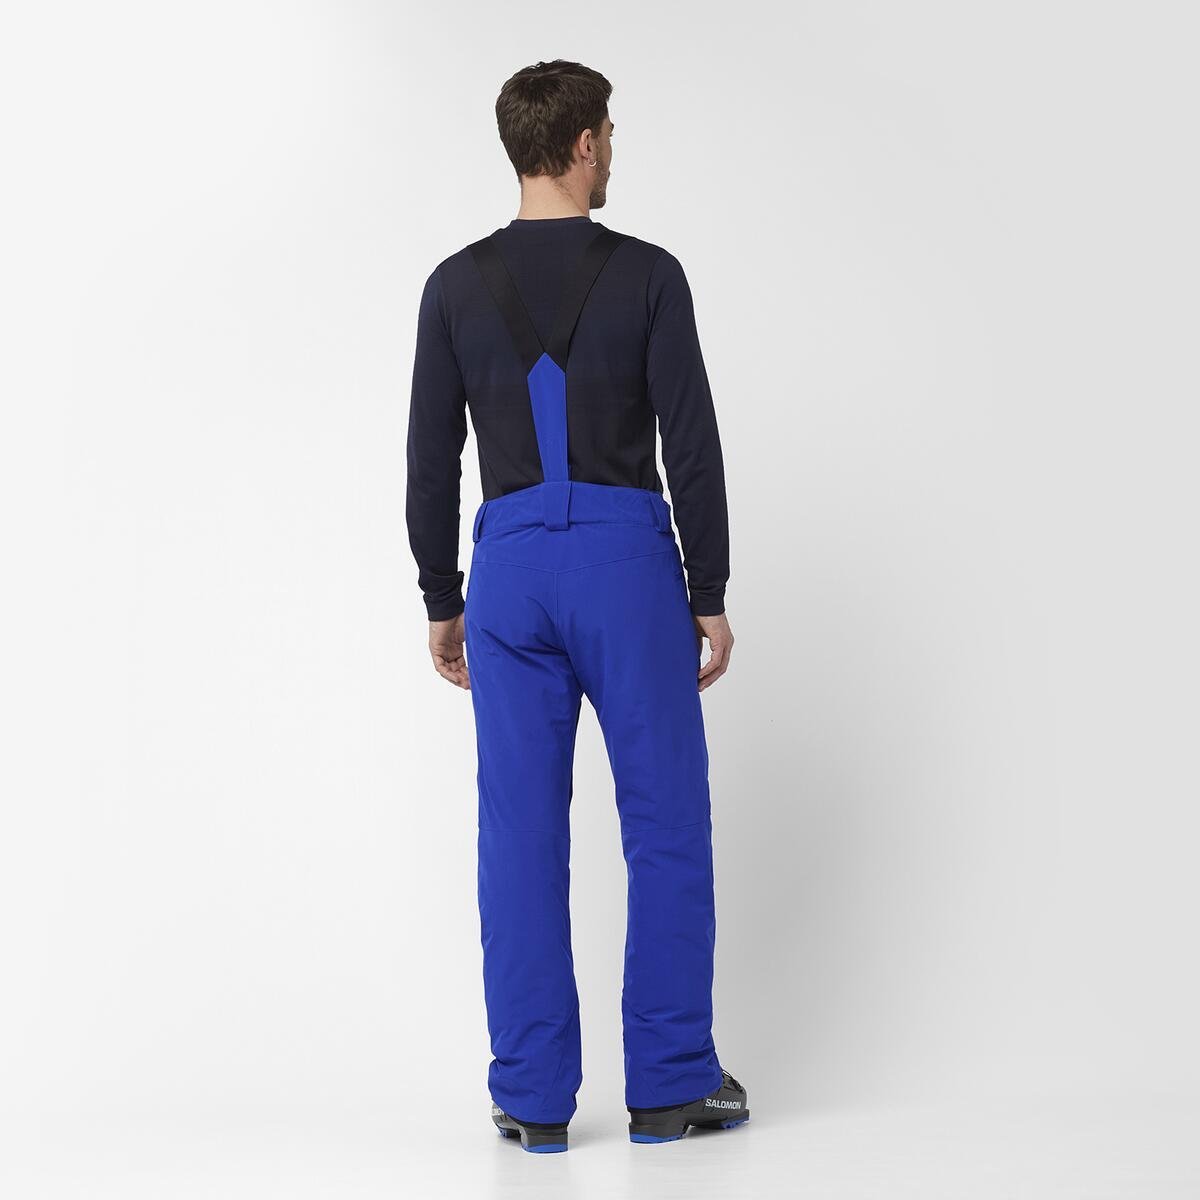 Nohavice Salomon Edge Pant M - modré (predĺžená dĺžka)